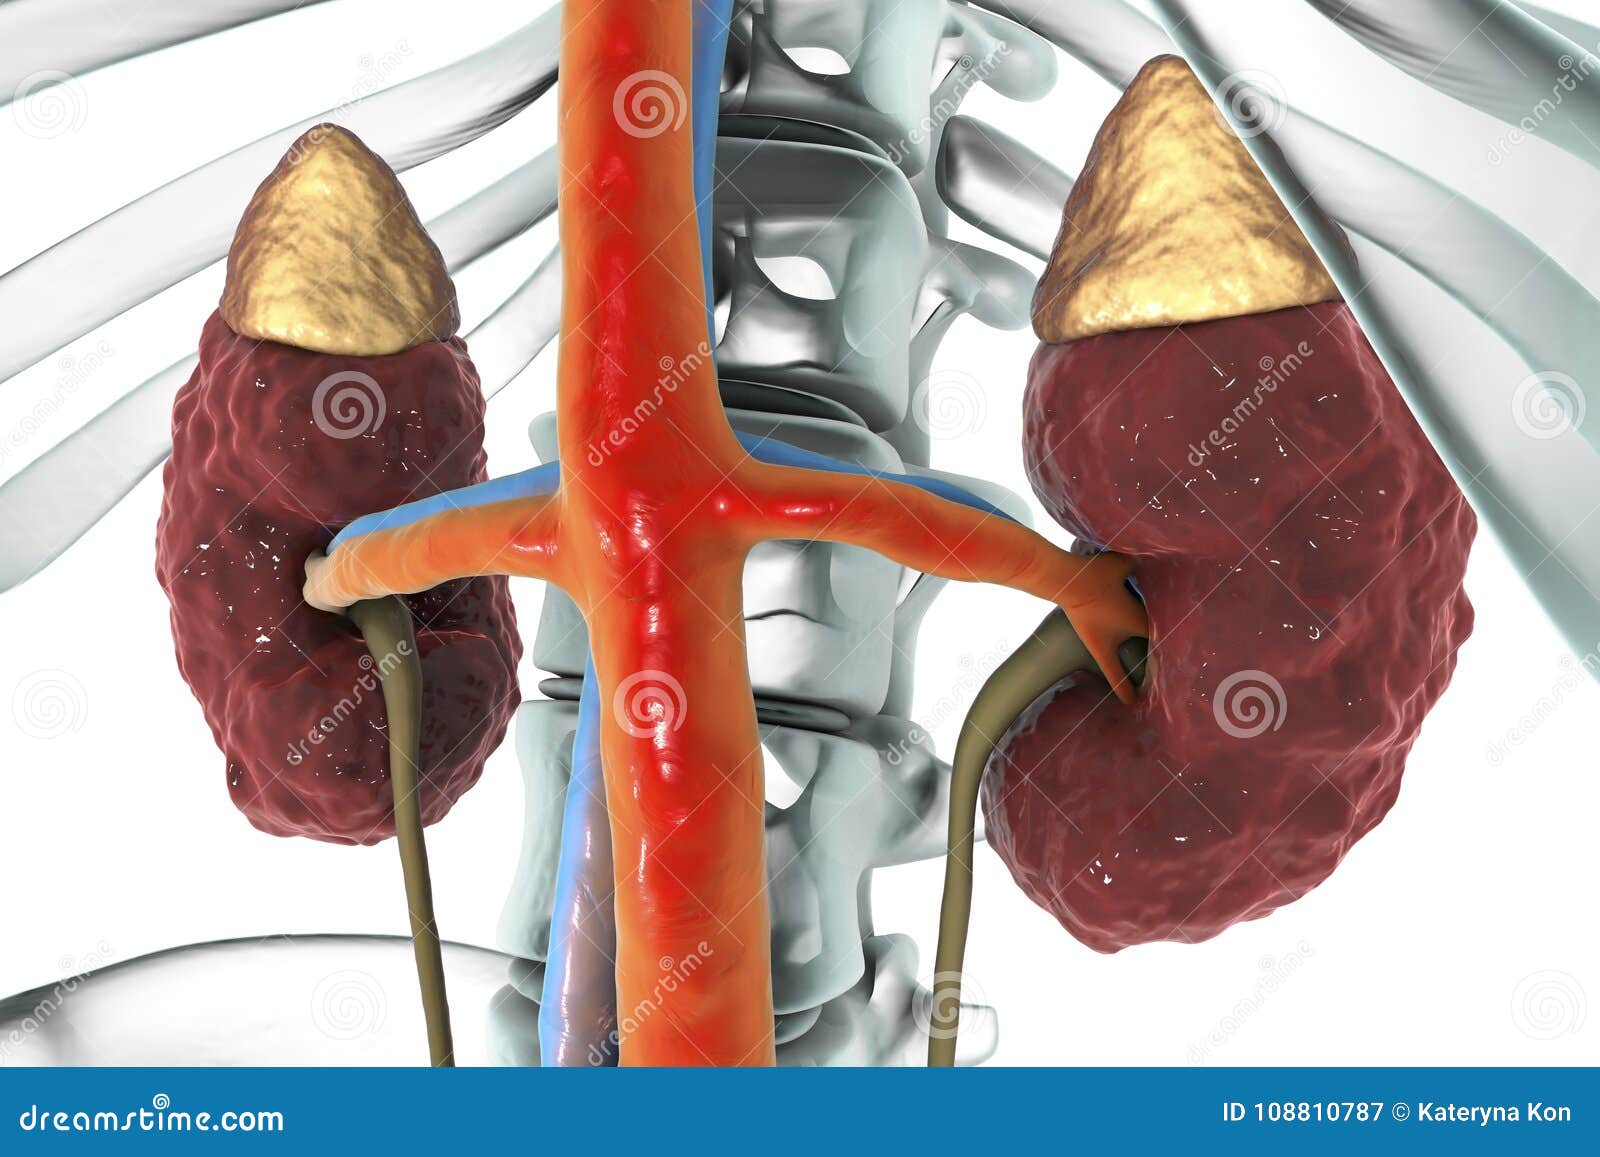 adrenal kidney failure